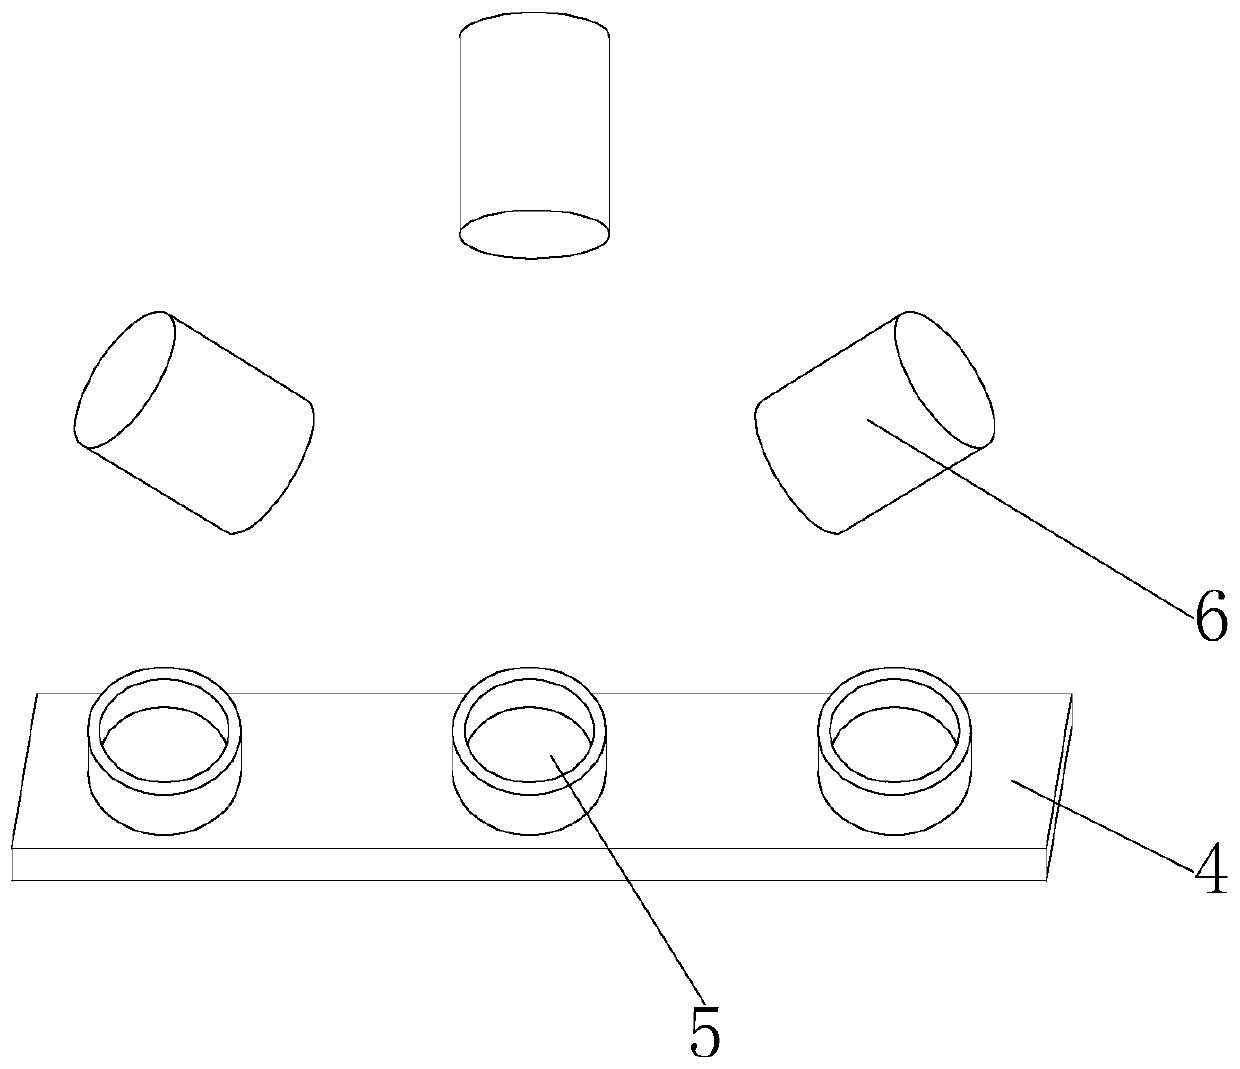 Inner cylinder surface defect detection method